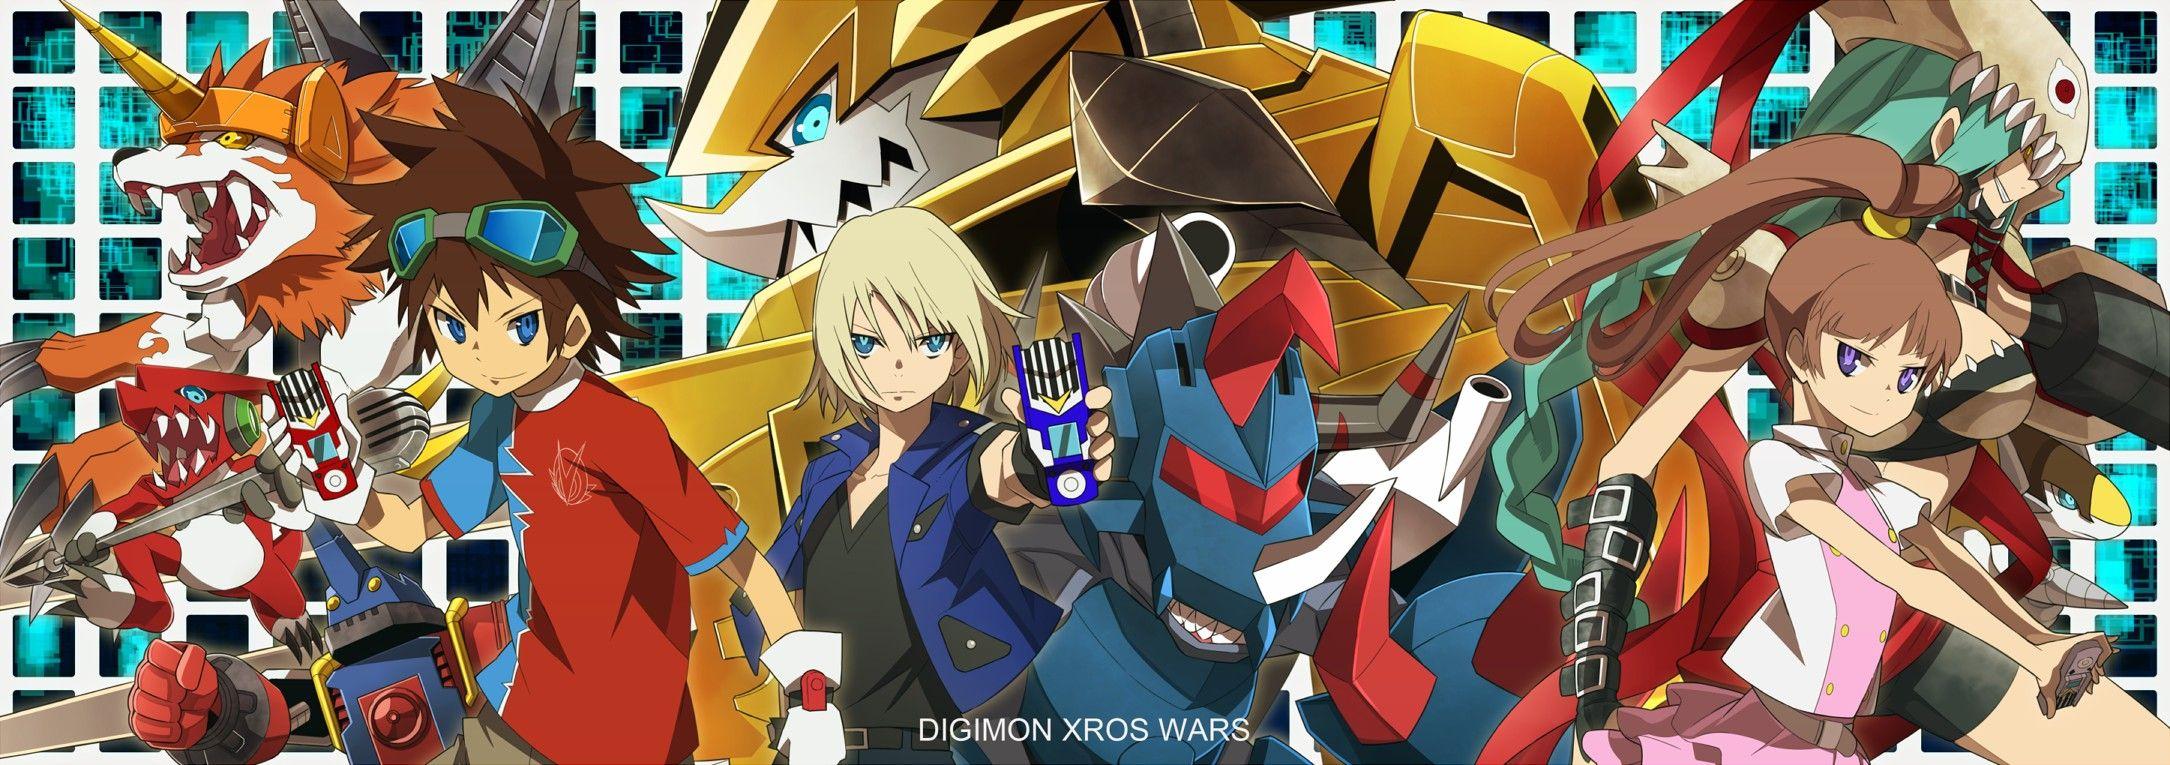 Shoutmon Xros Wars Anime Image Board